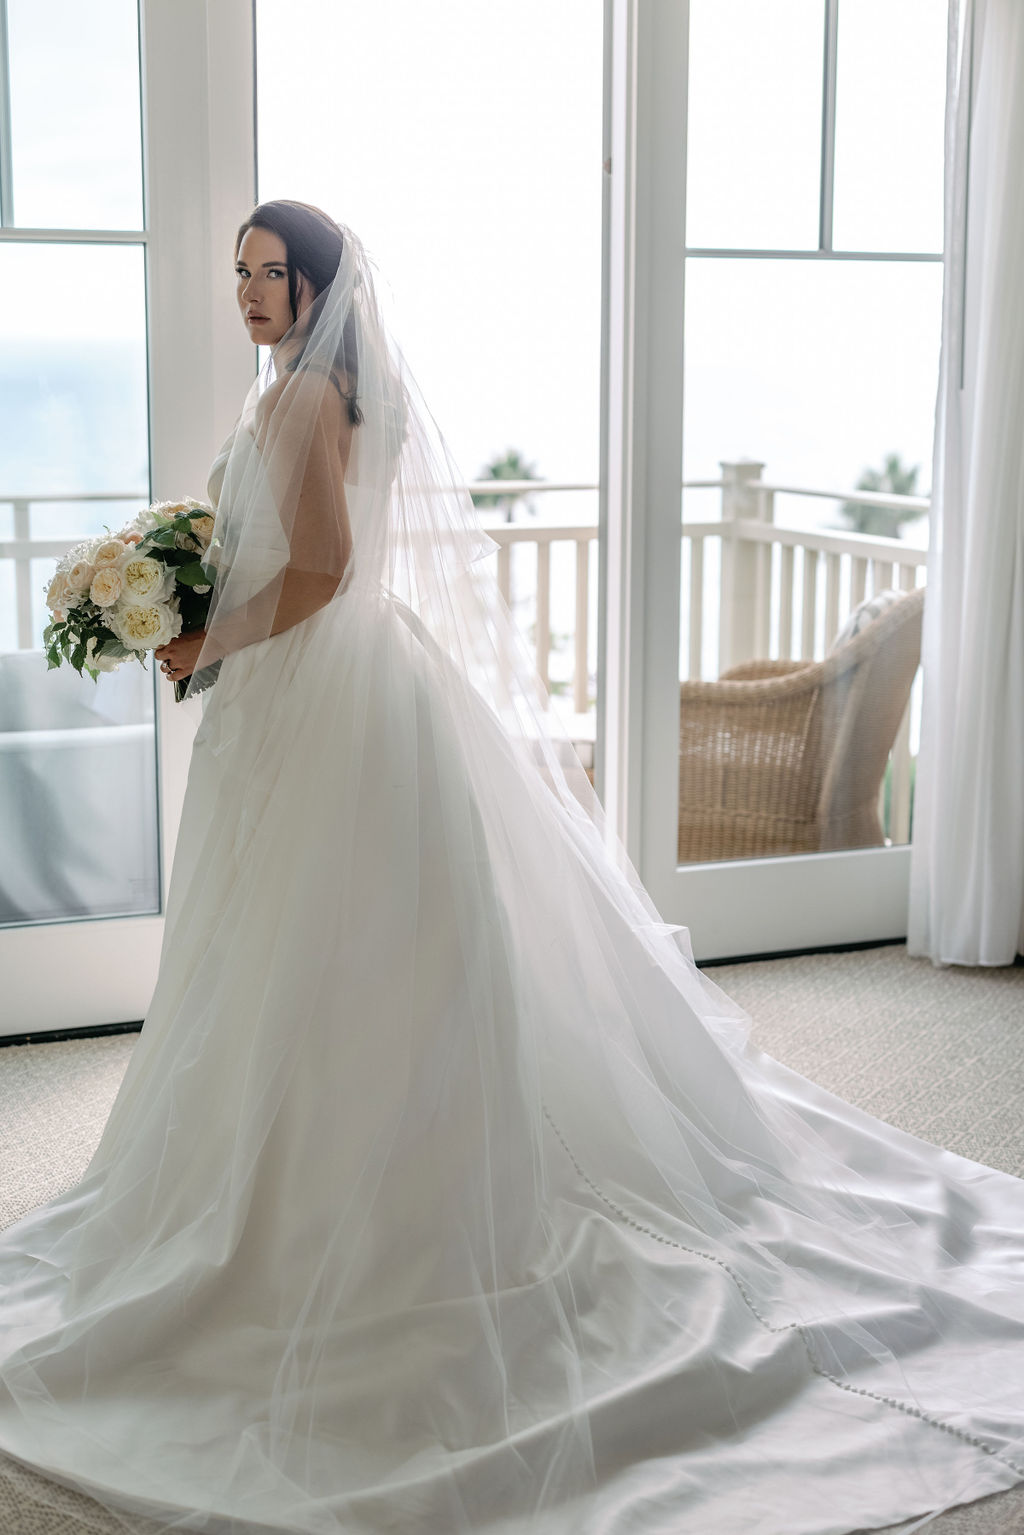 Montage Laguna Beach Wedding, Laguna Beach Wedding Photographer, Southern California Wedding Photographer, Jana Williams Photography